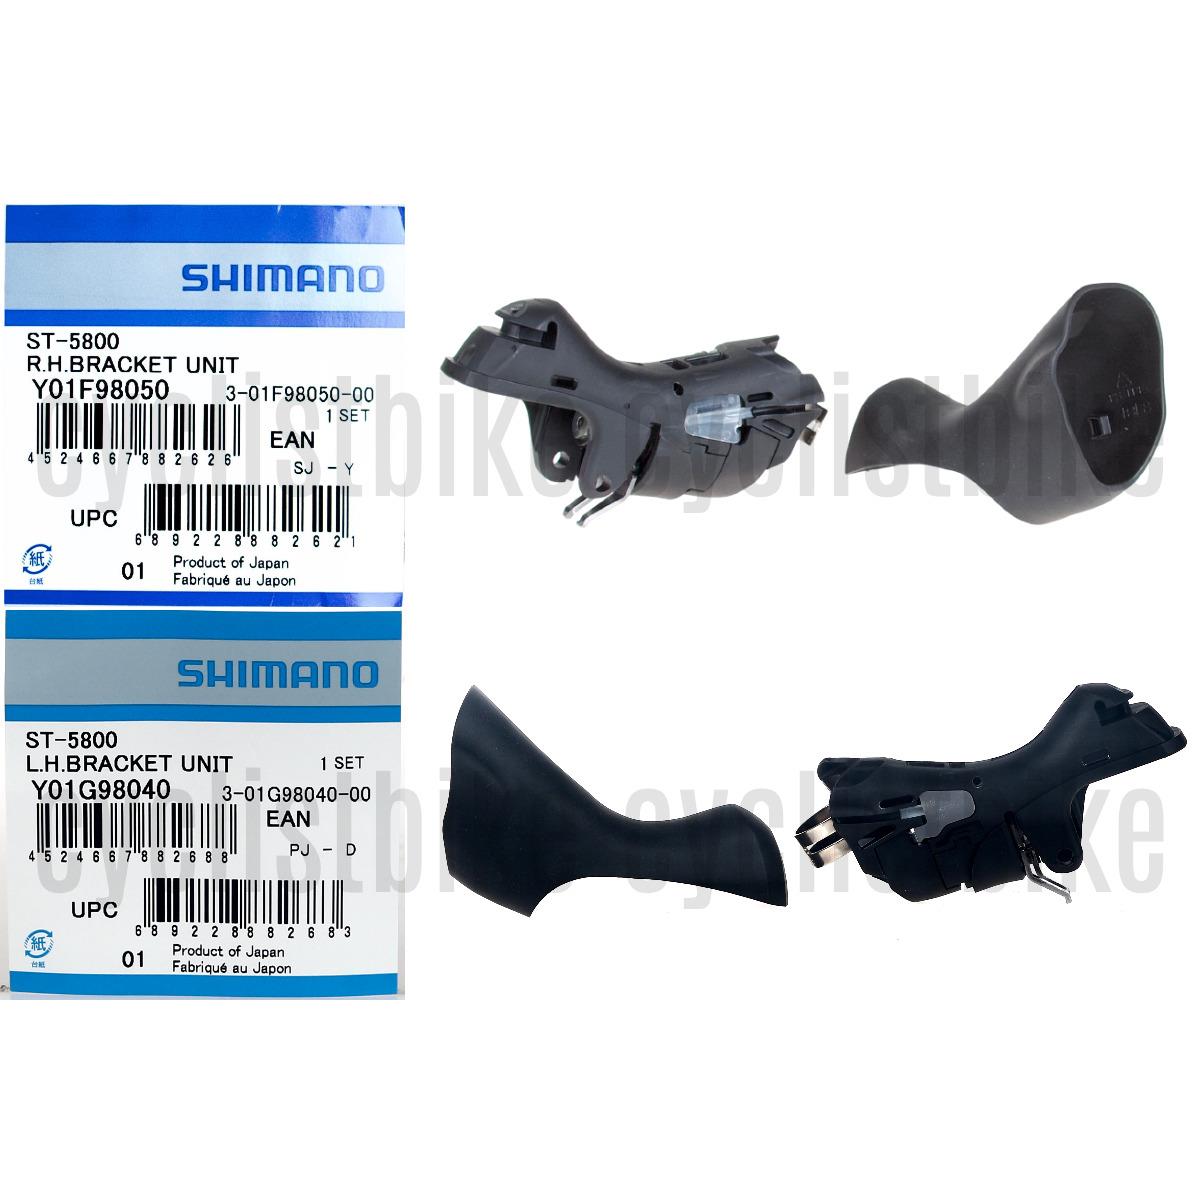 Shimano 105 5800 Left Right Shift Bracket Assembly Black